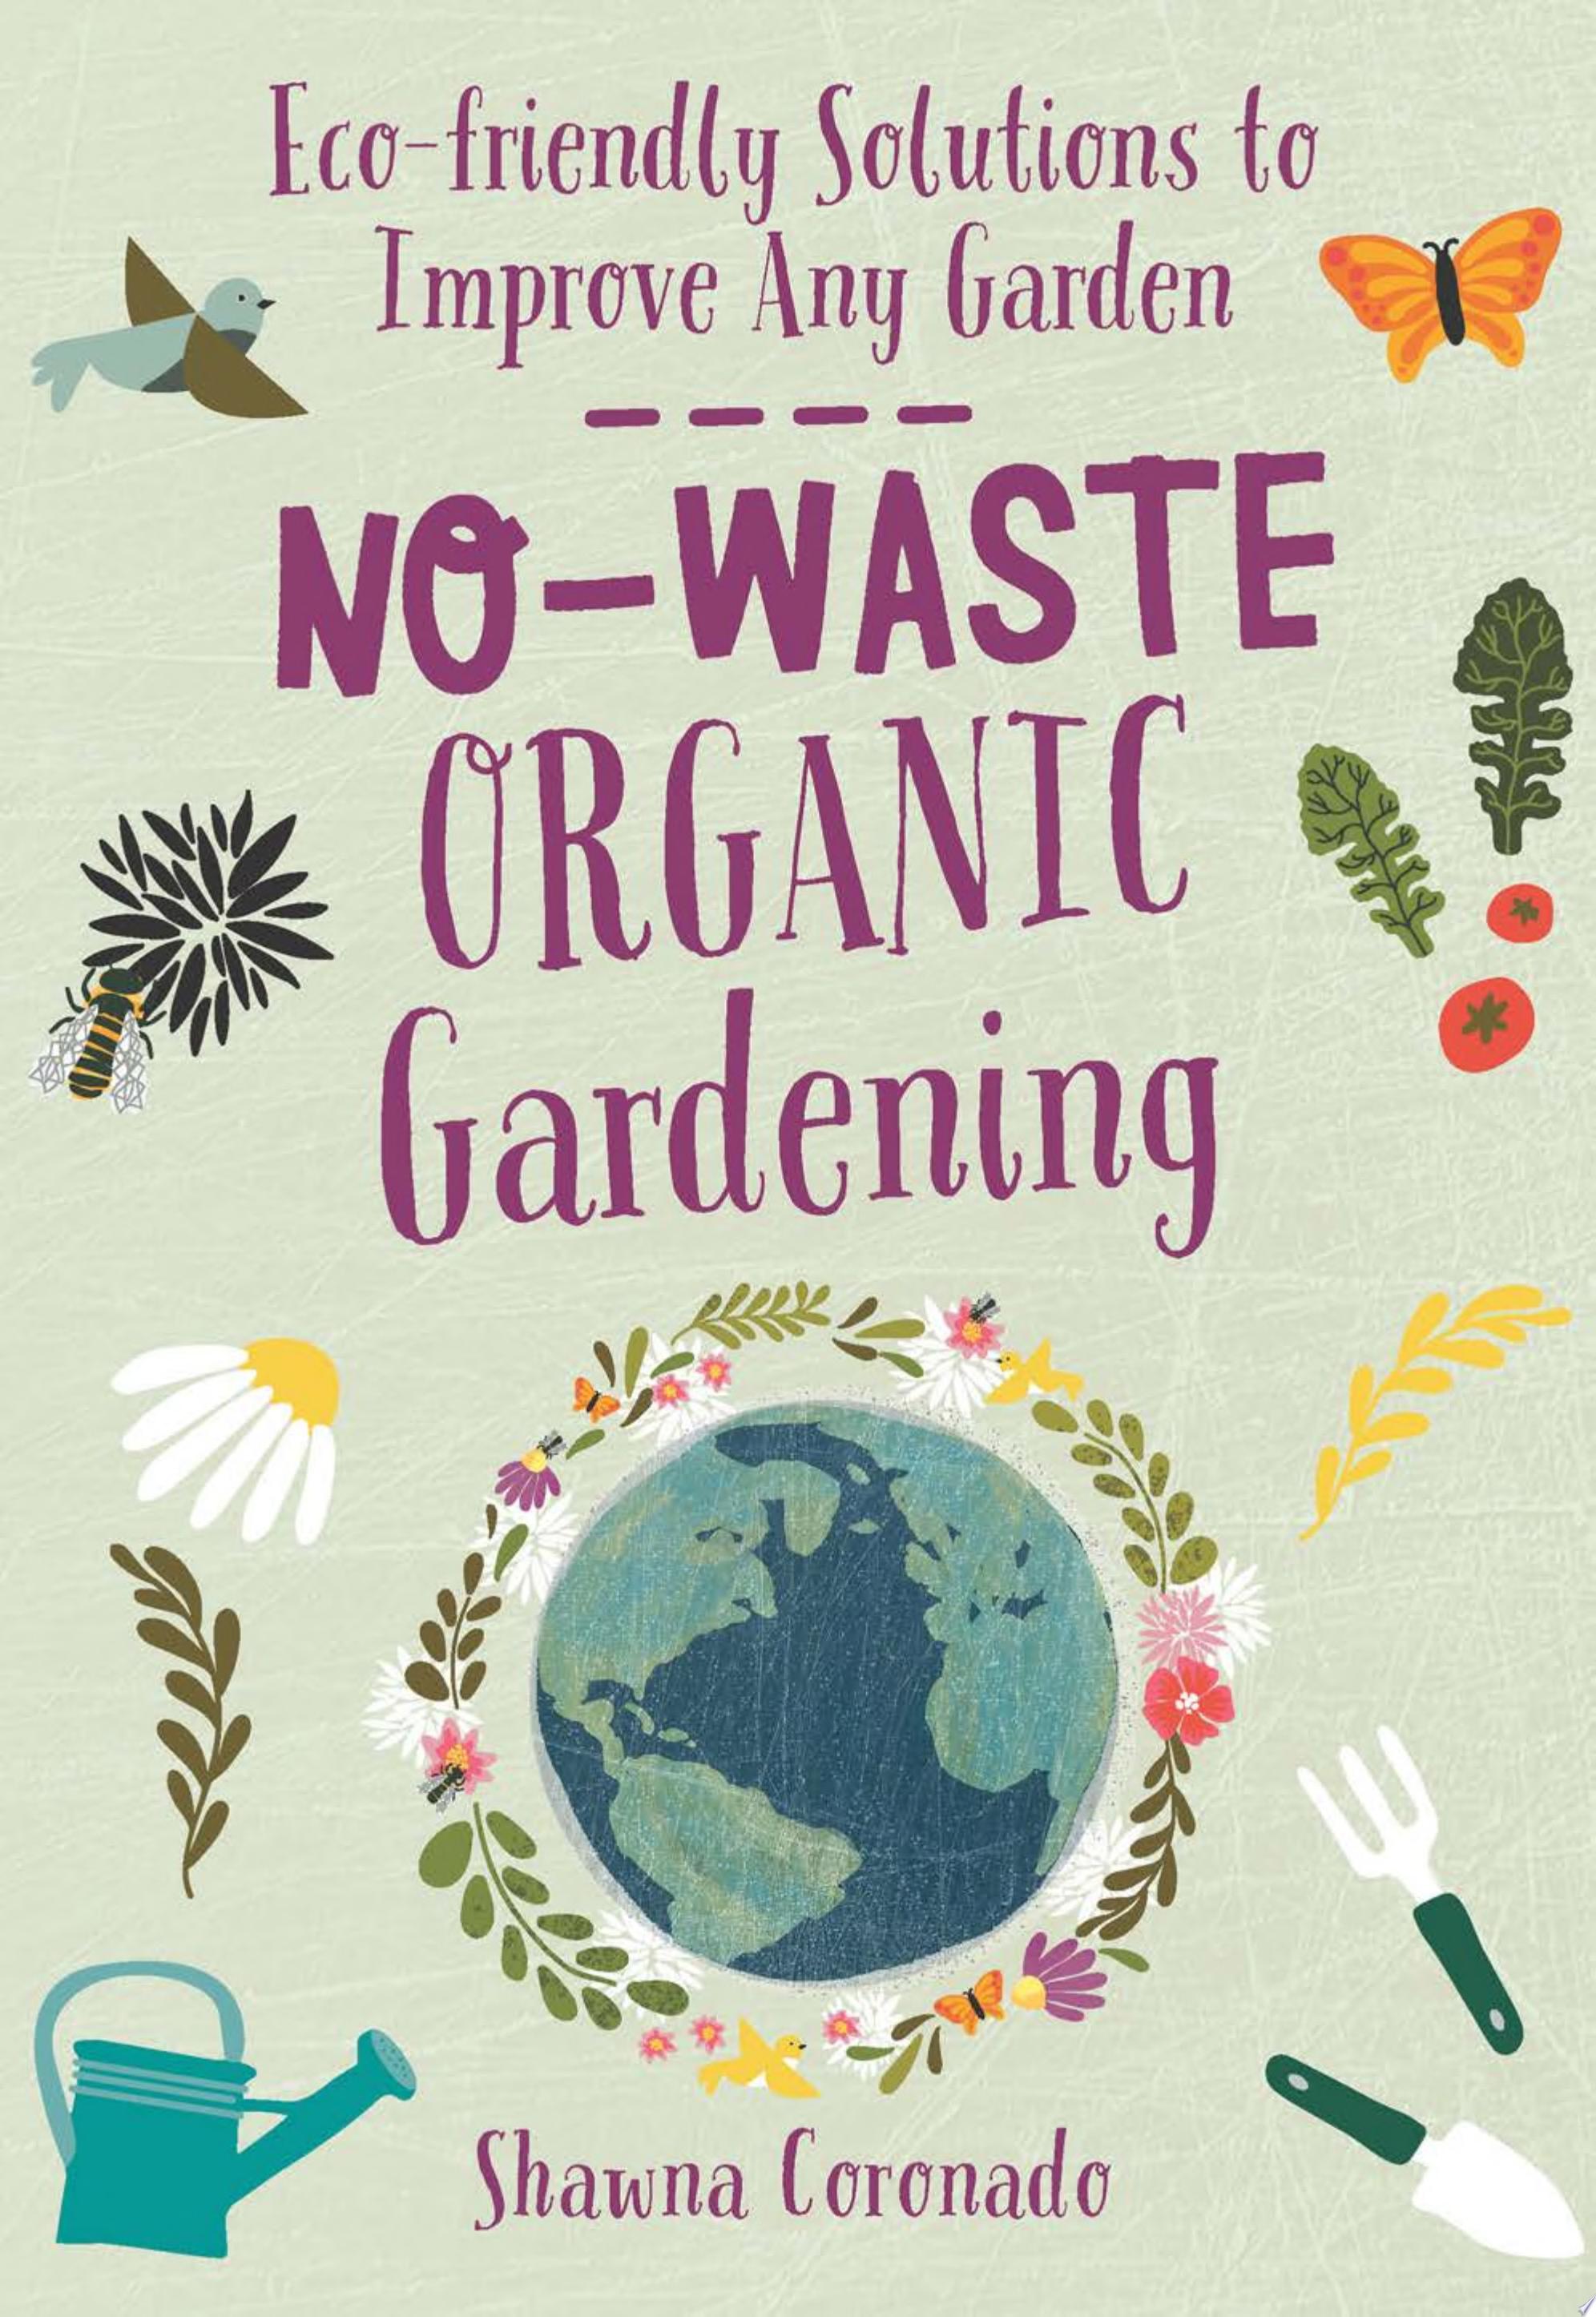 Image for "No-Waste Organic Gardening"